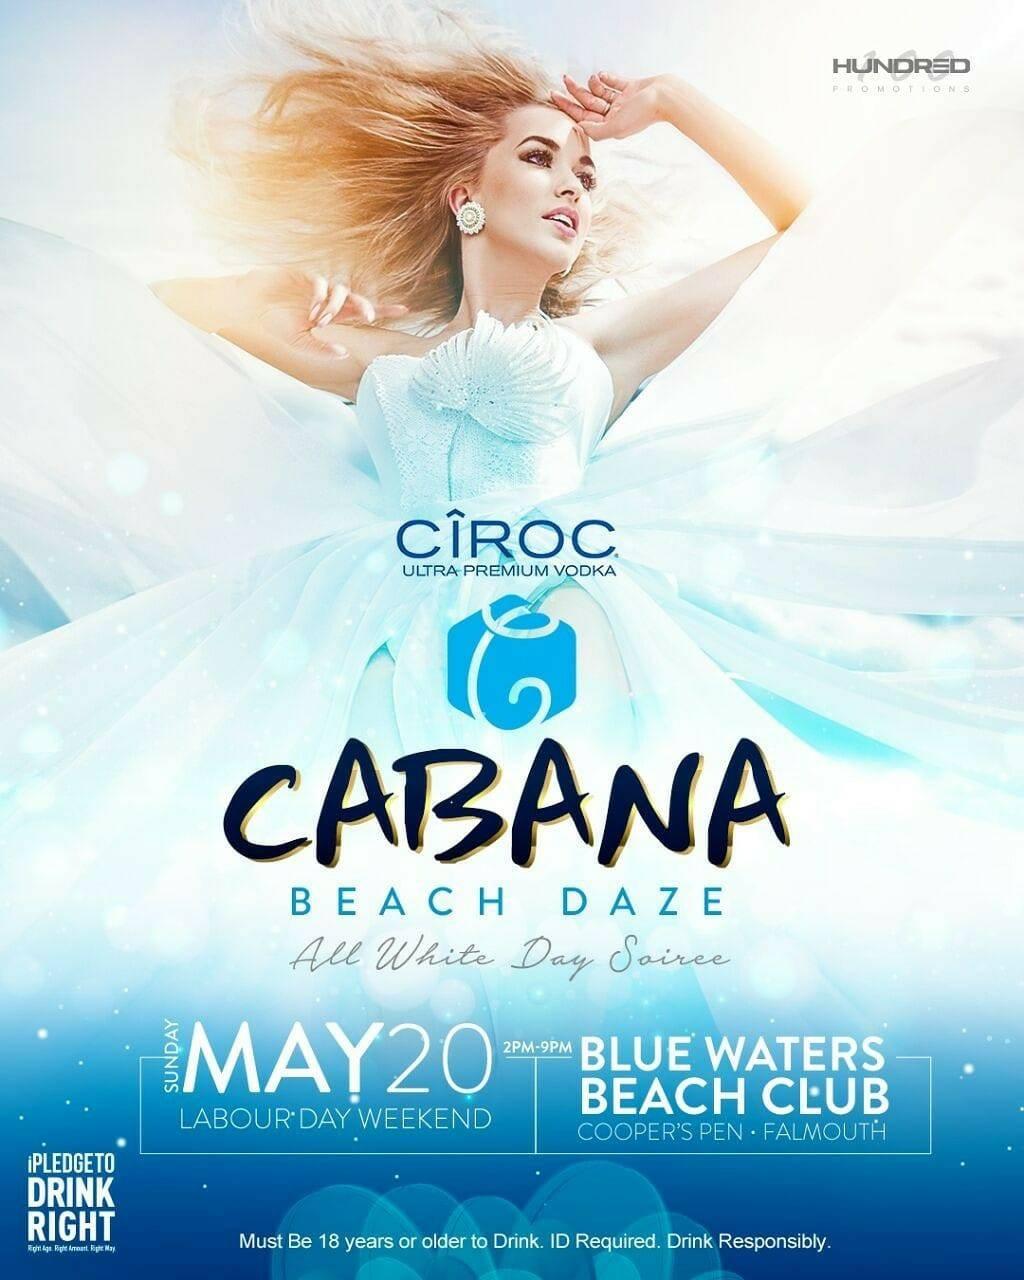 Cabana Beach Daze All White Day